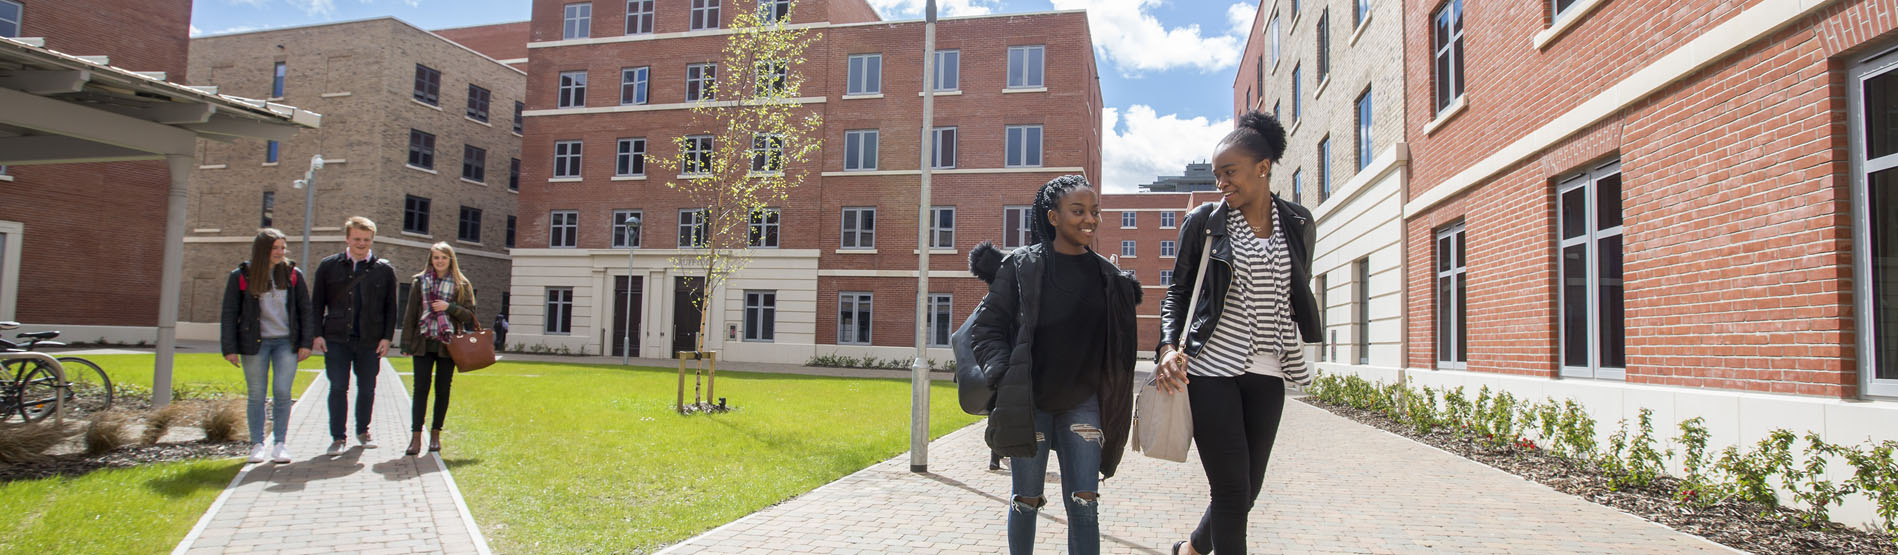 Students walking through Swansea University Bay Campus